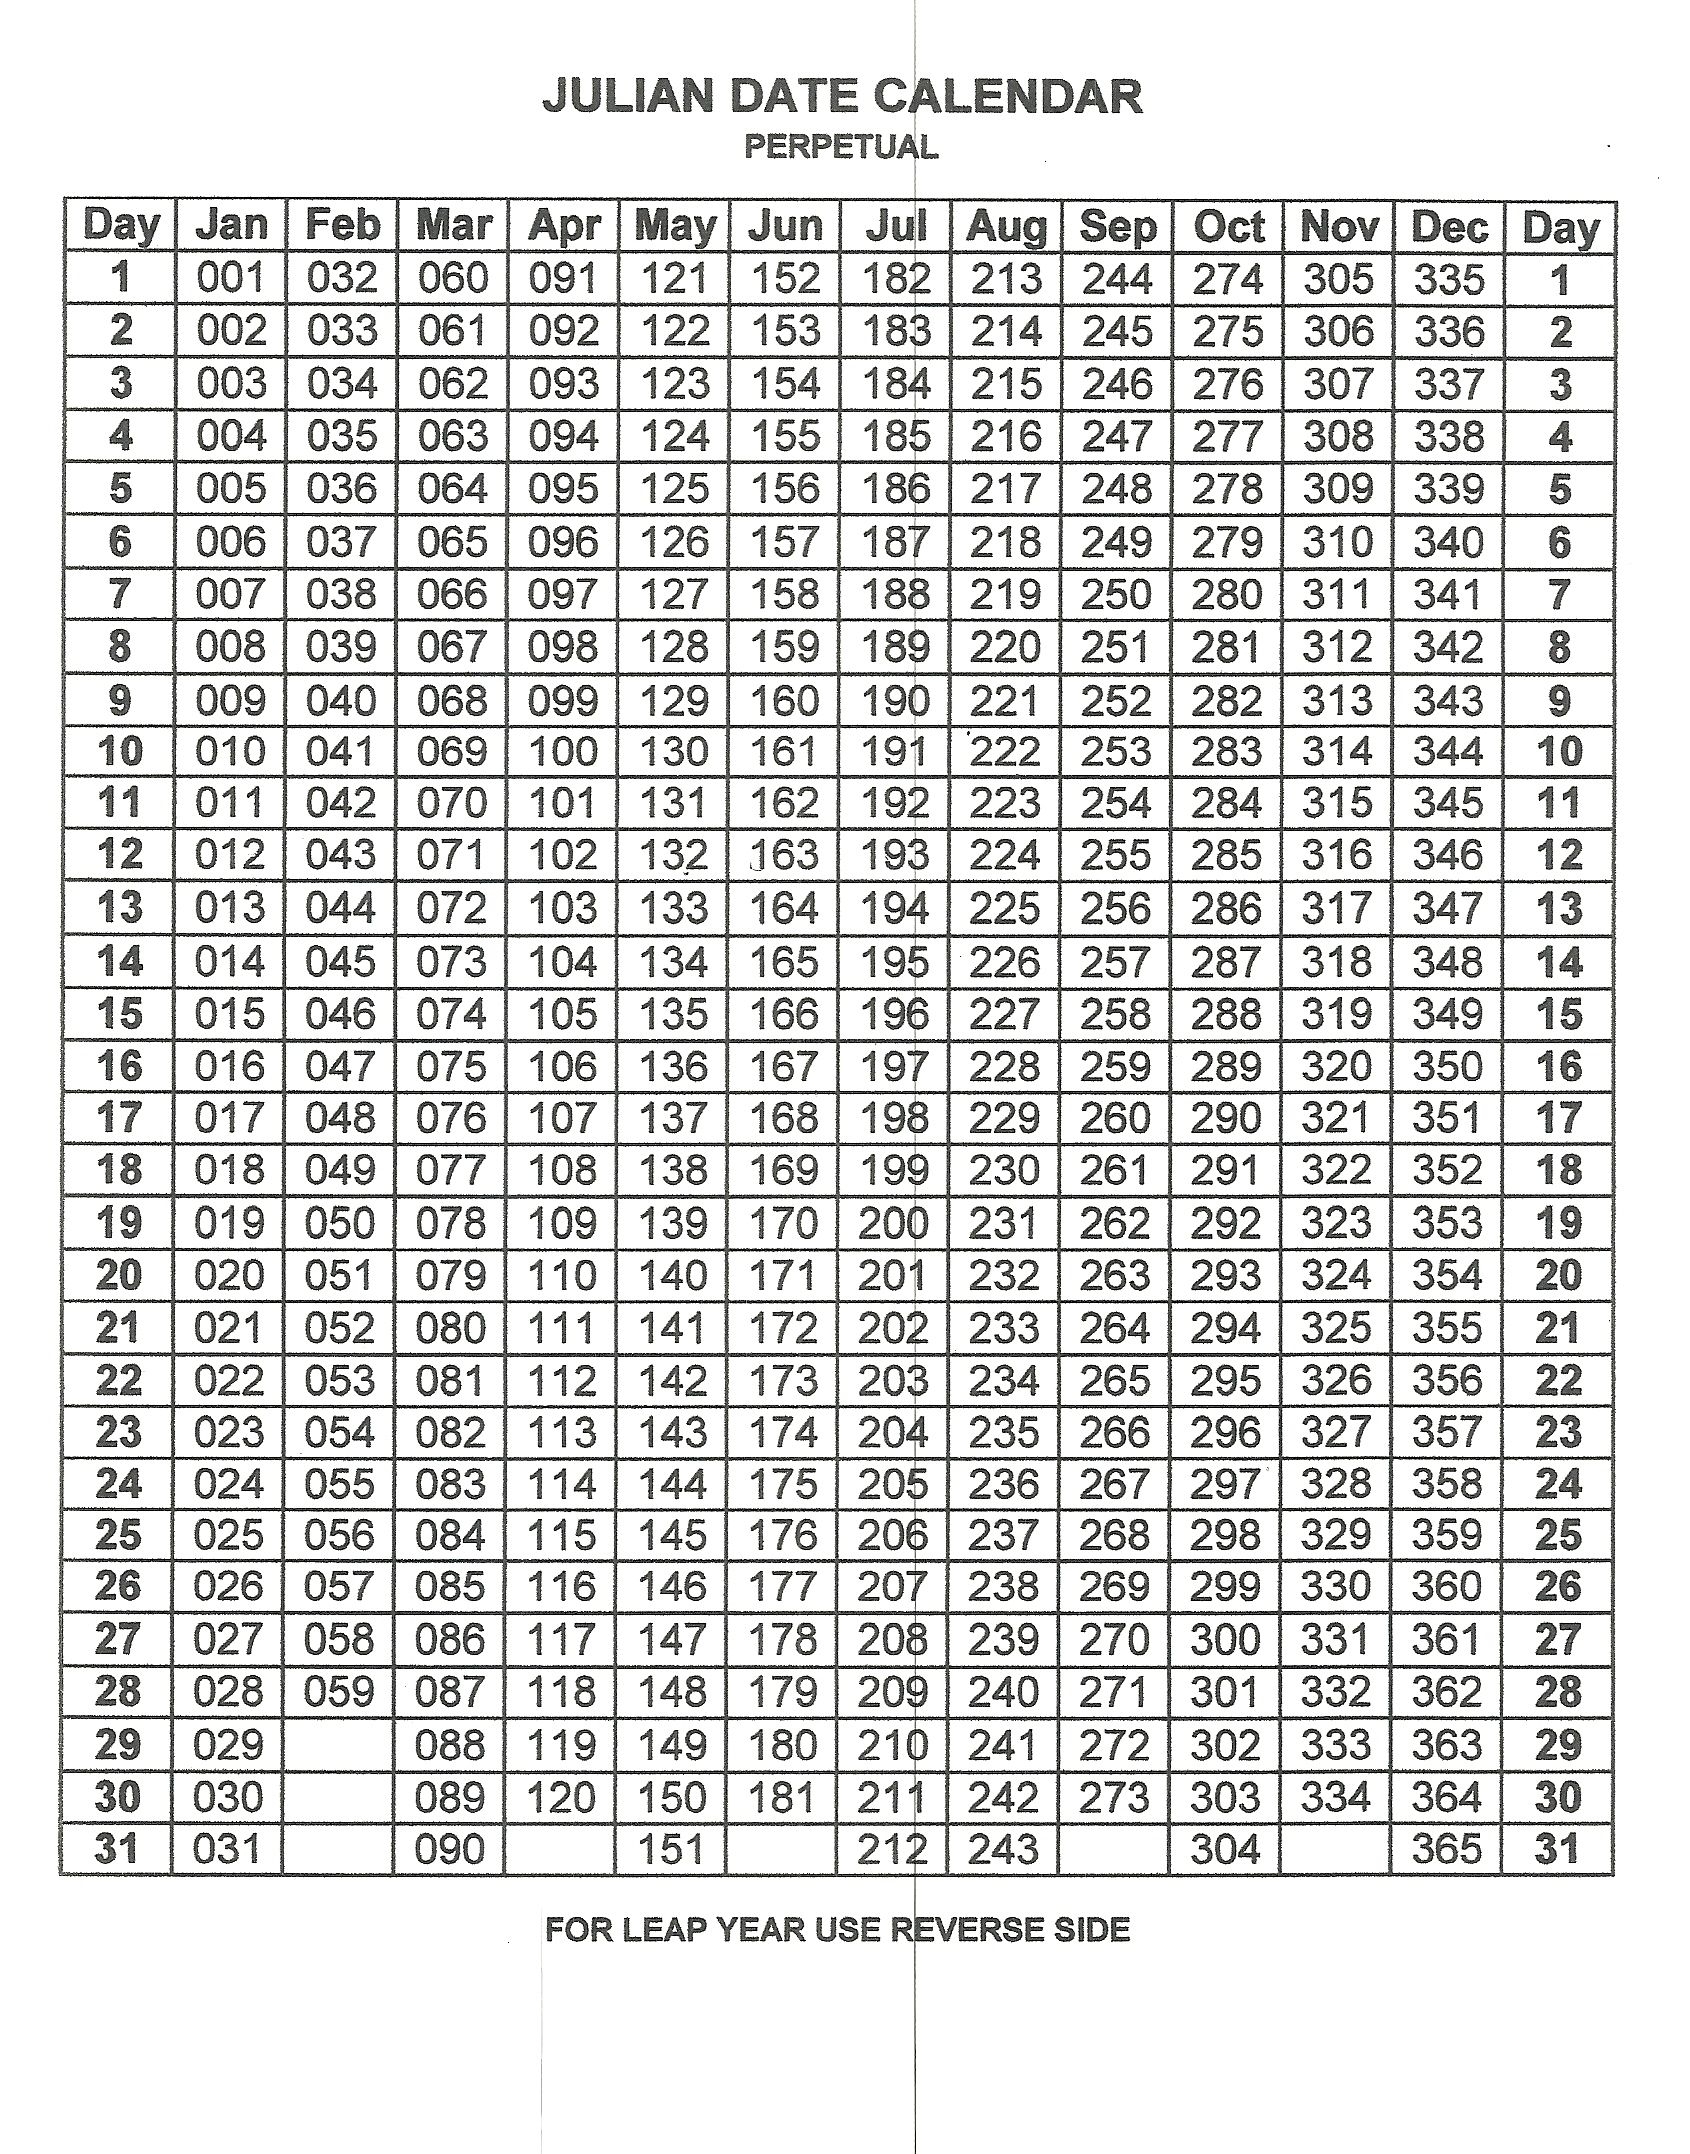 Take Julian Date Calendar 2021 Printable